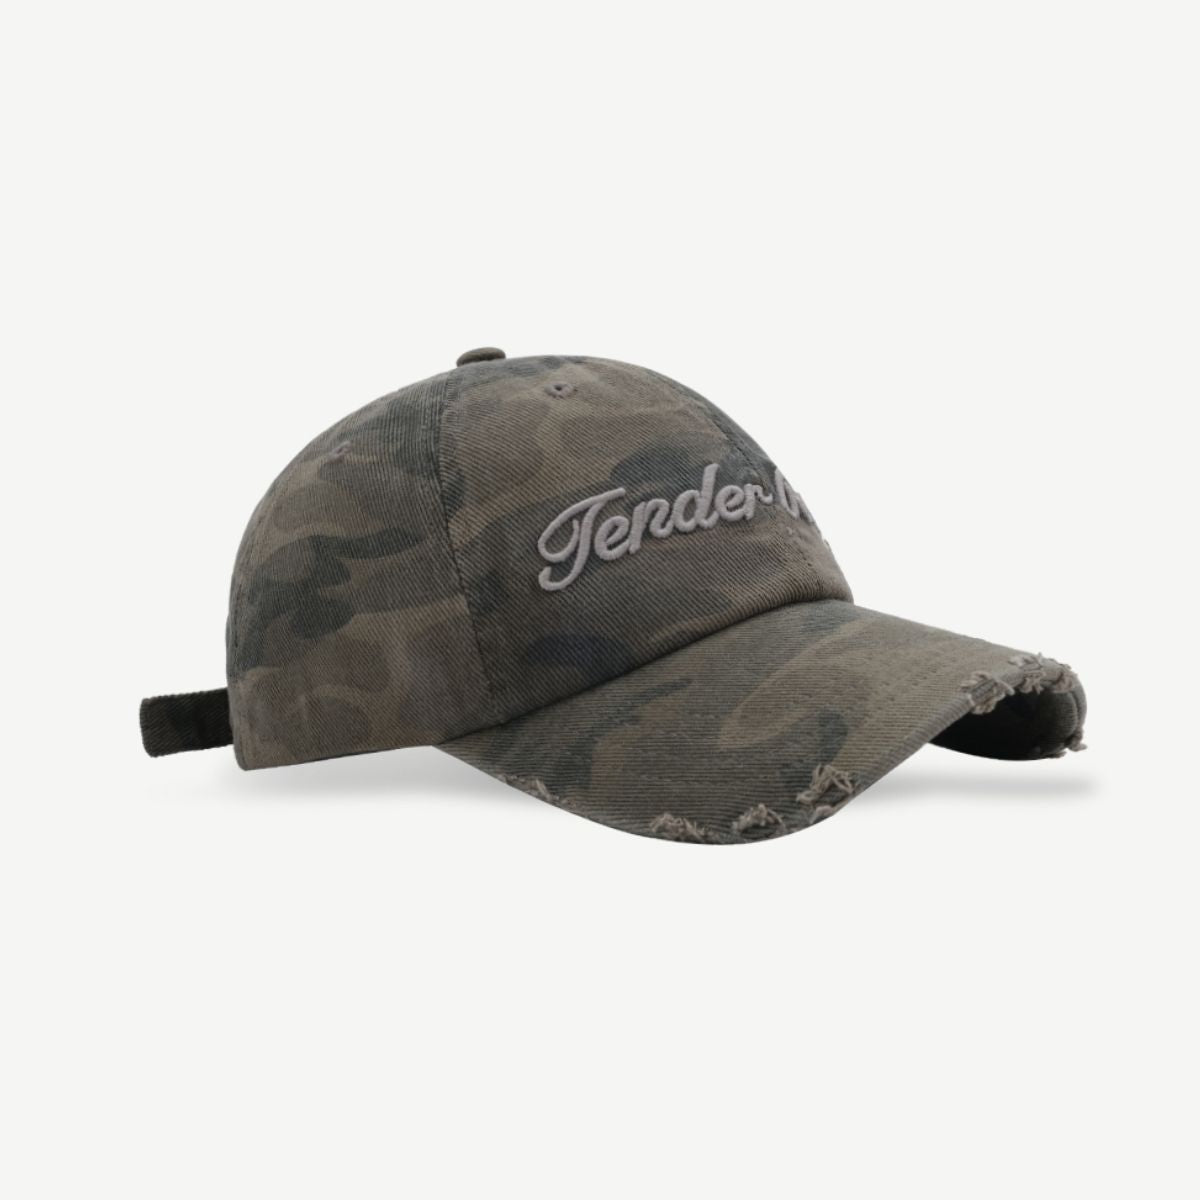 TEEK - Letter Graphic Camouflage Cotton Hat HAT TEEK Trend   